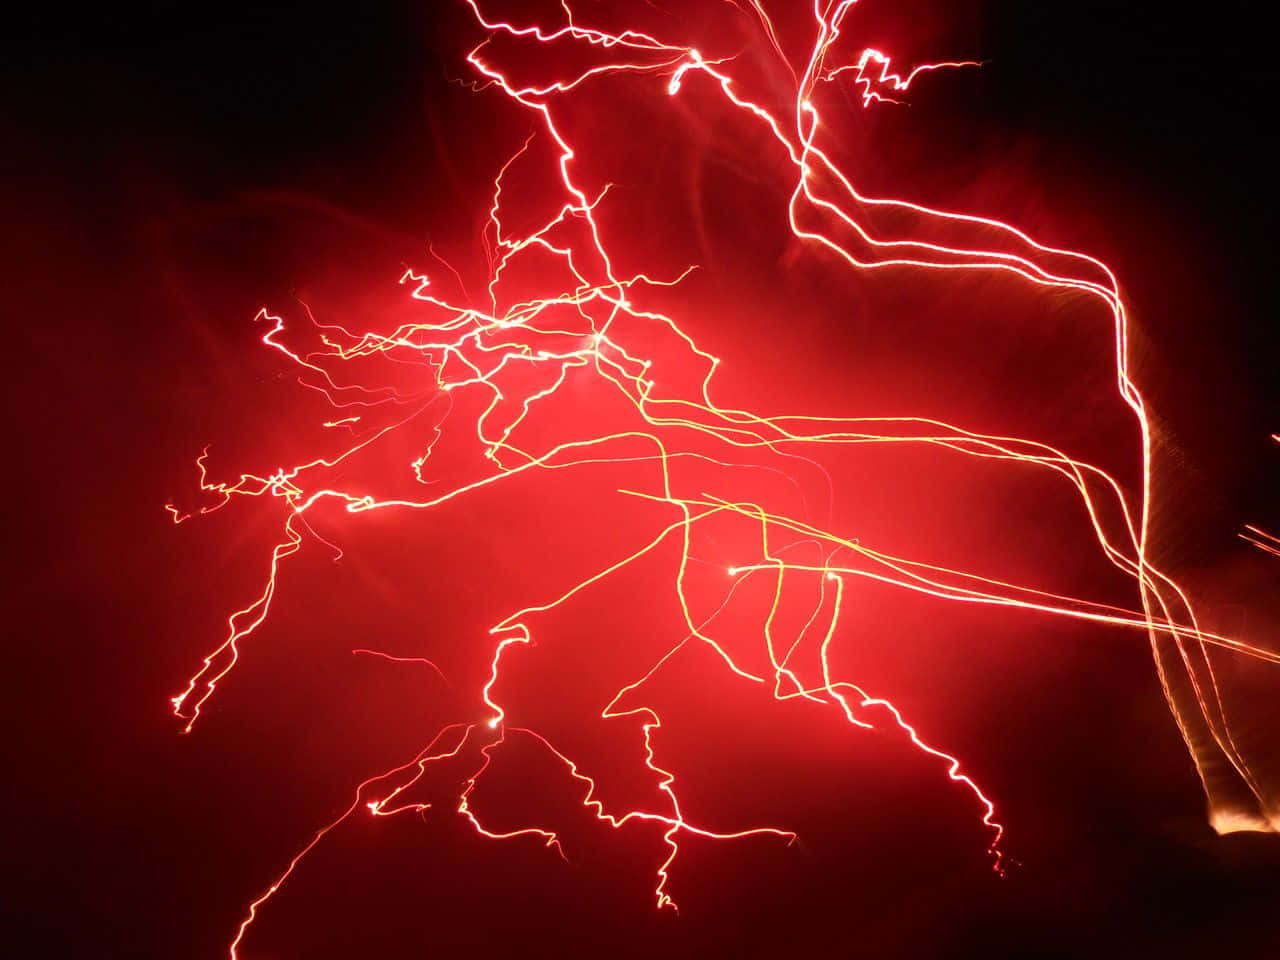 "Sparking Electric Red Lightning"